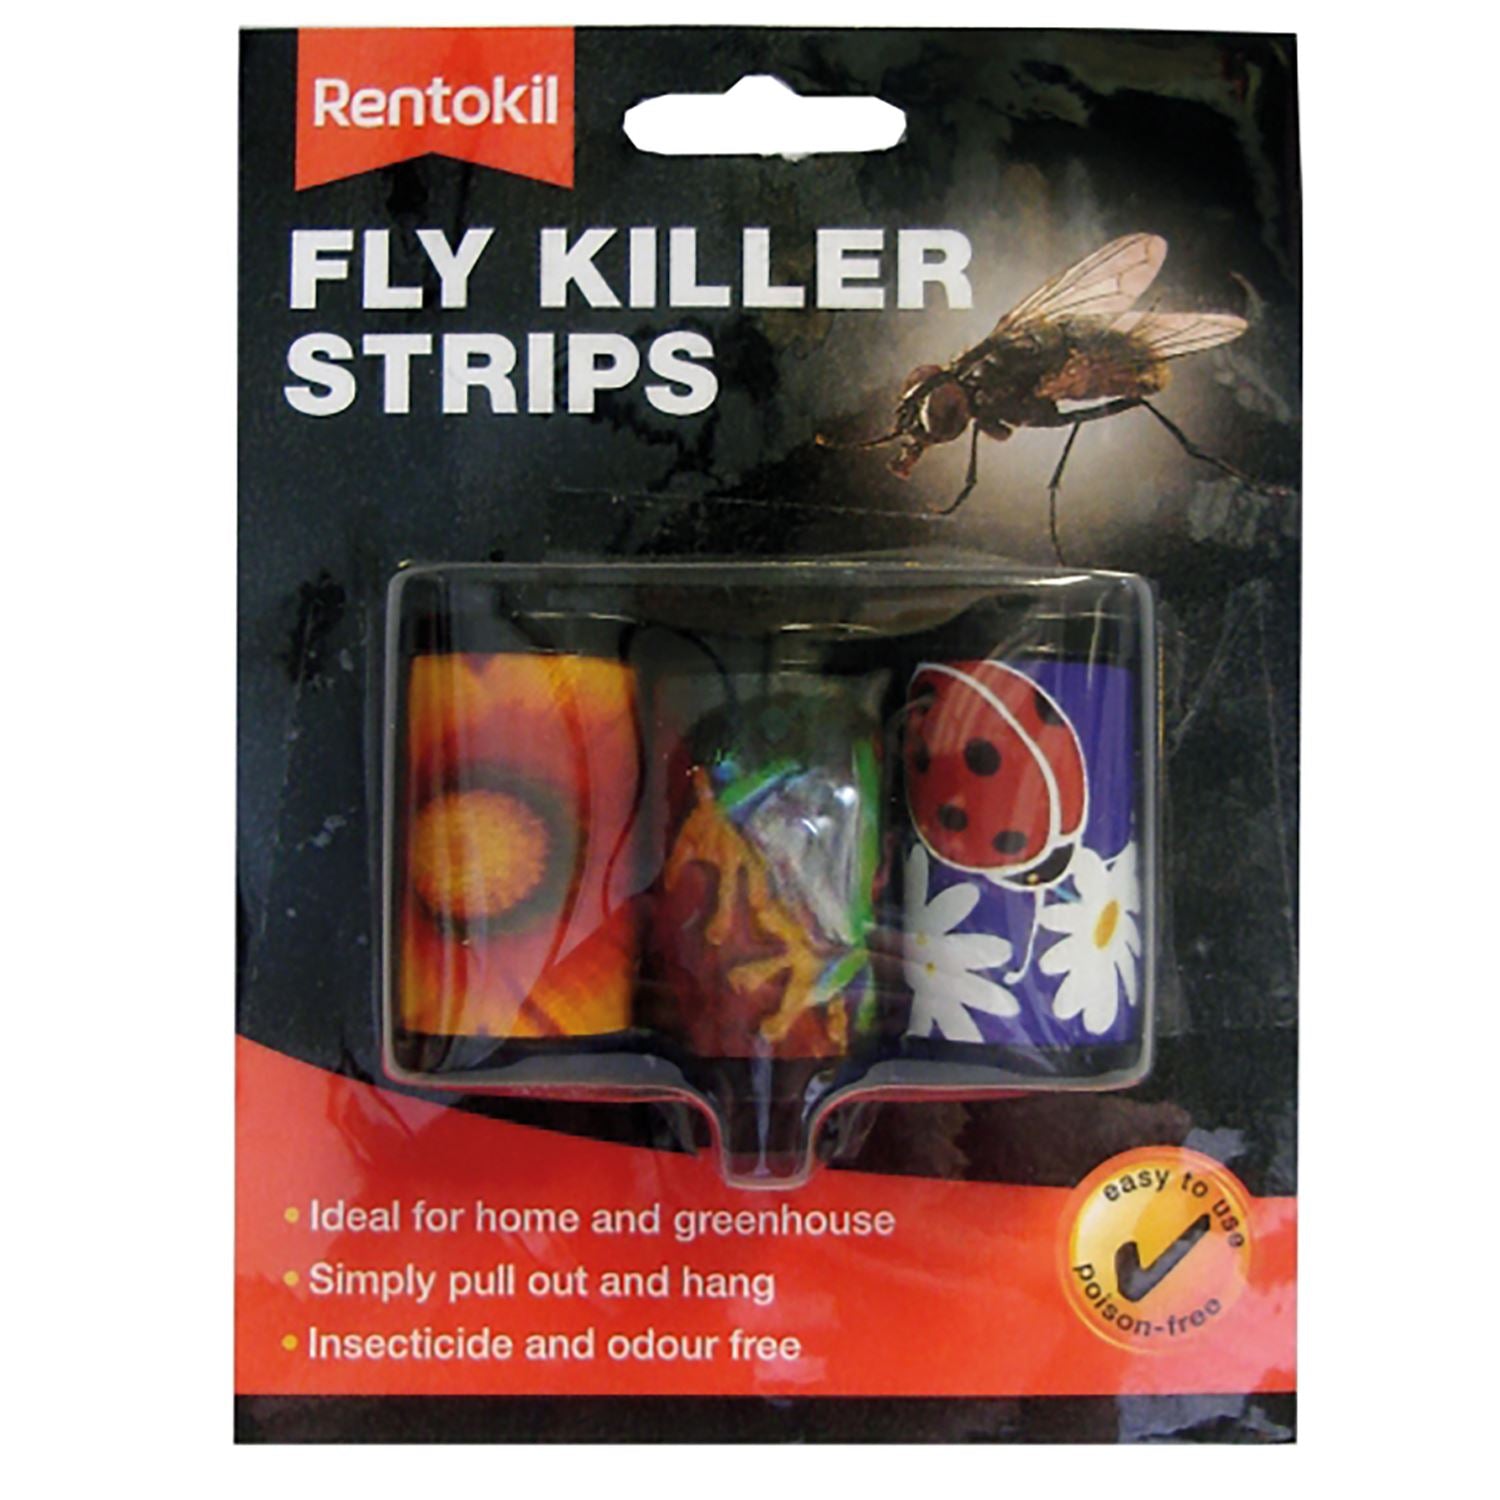 Rentokil Fly Killer Strips - Just Horse Riders